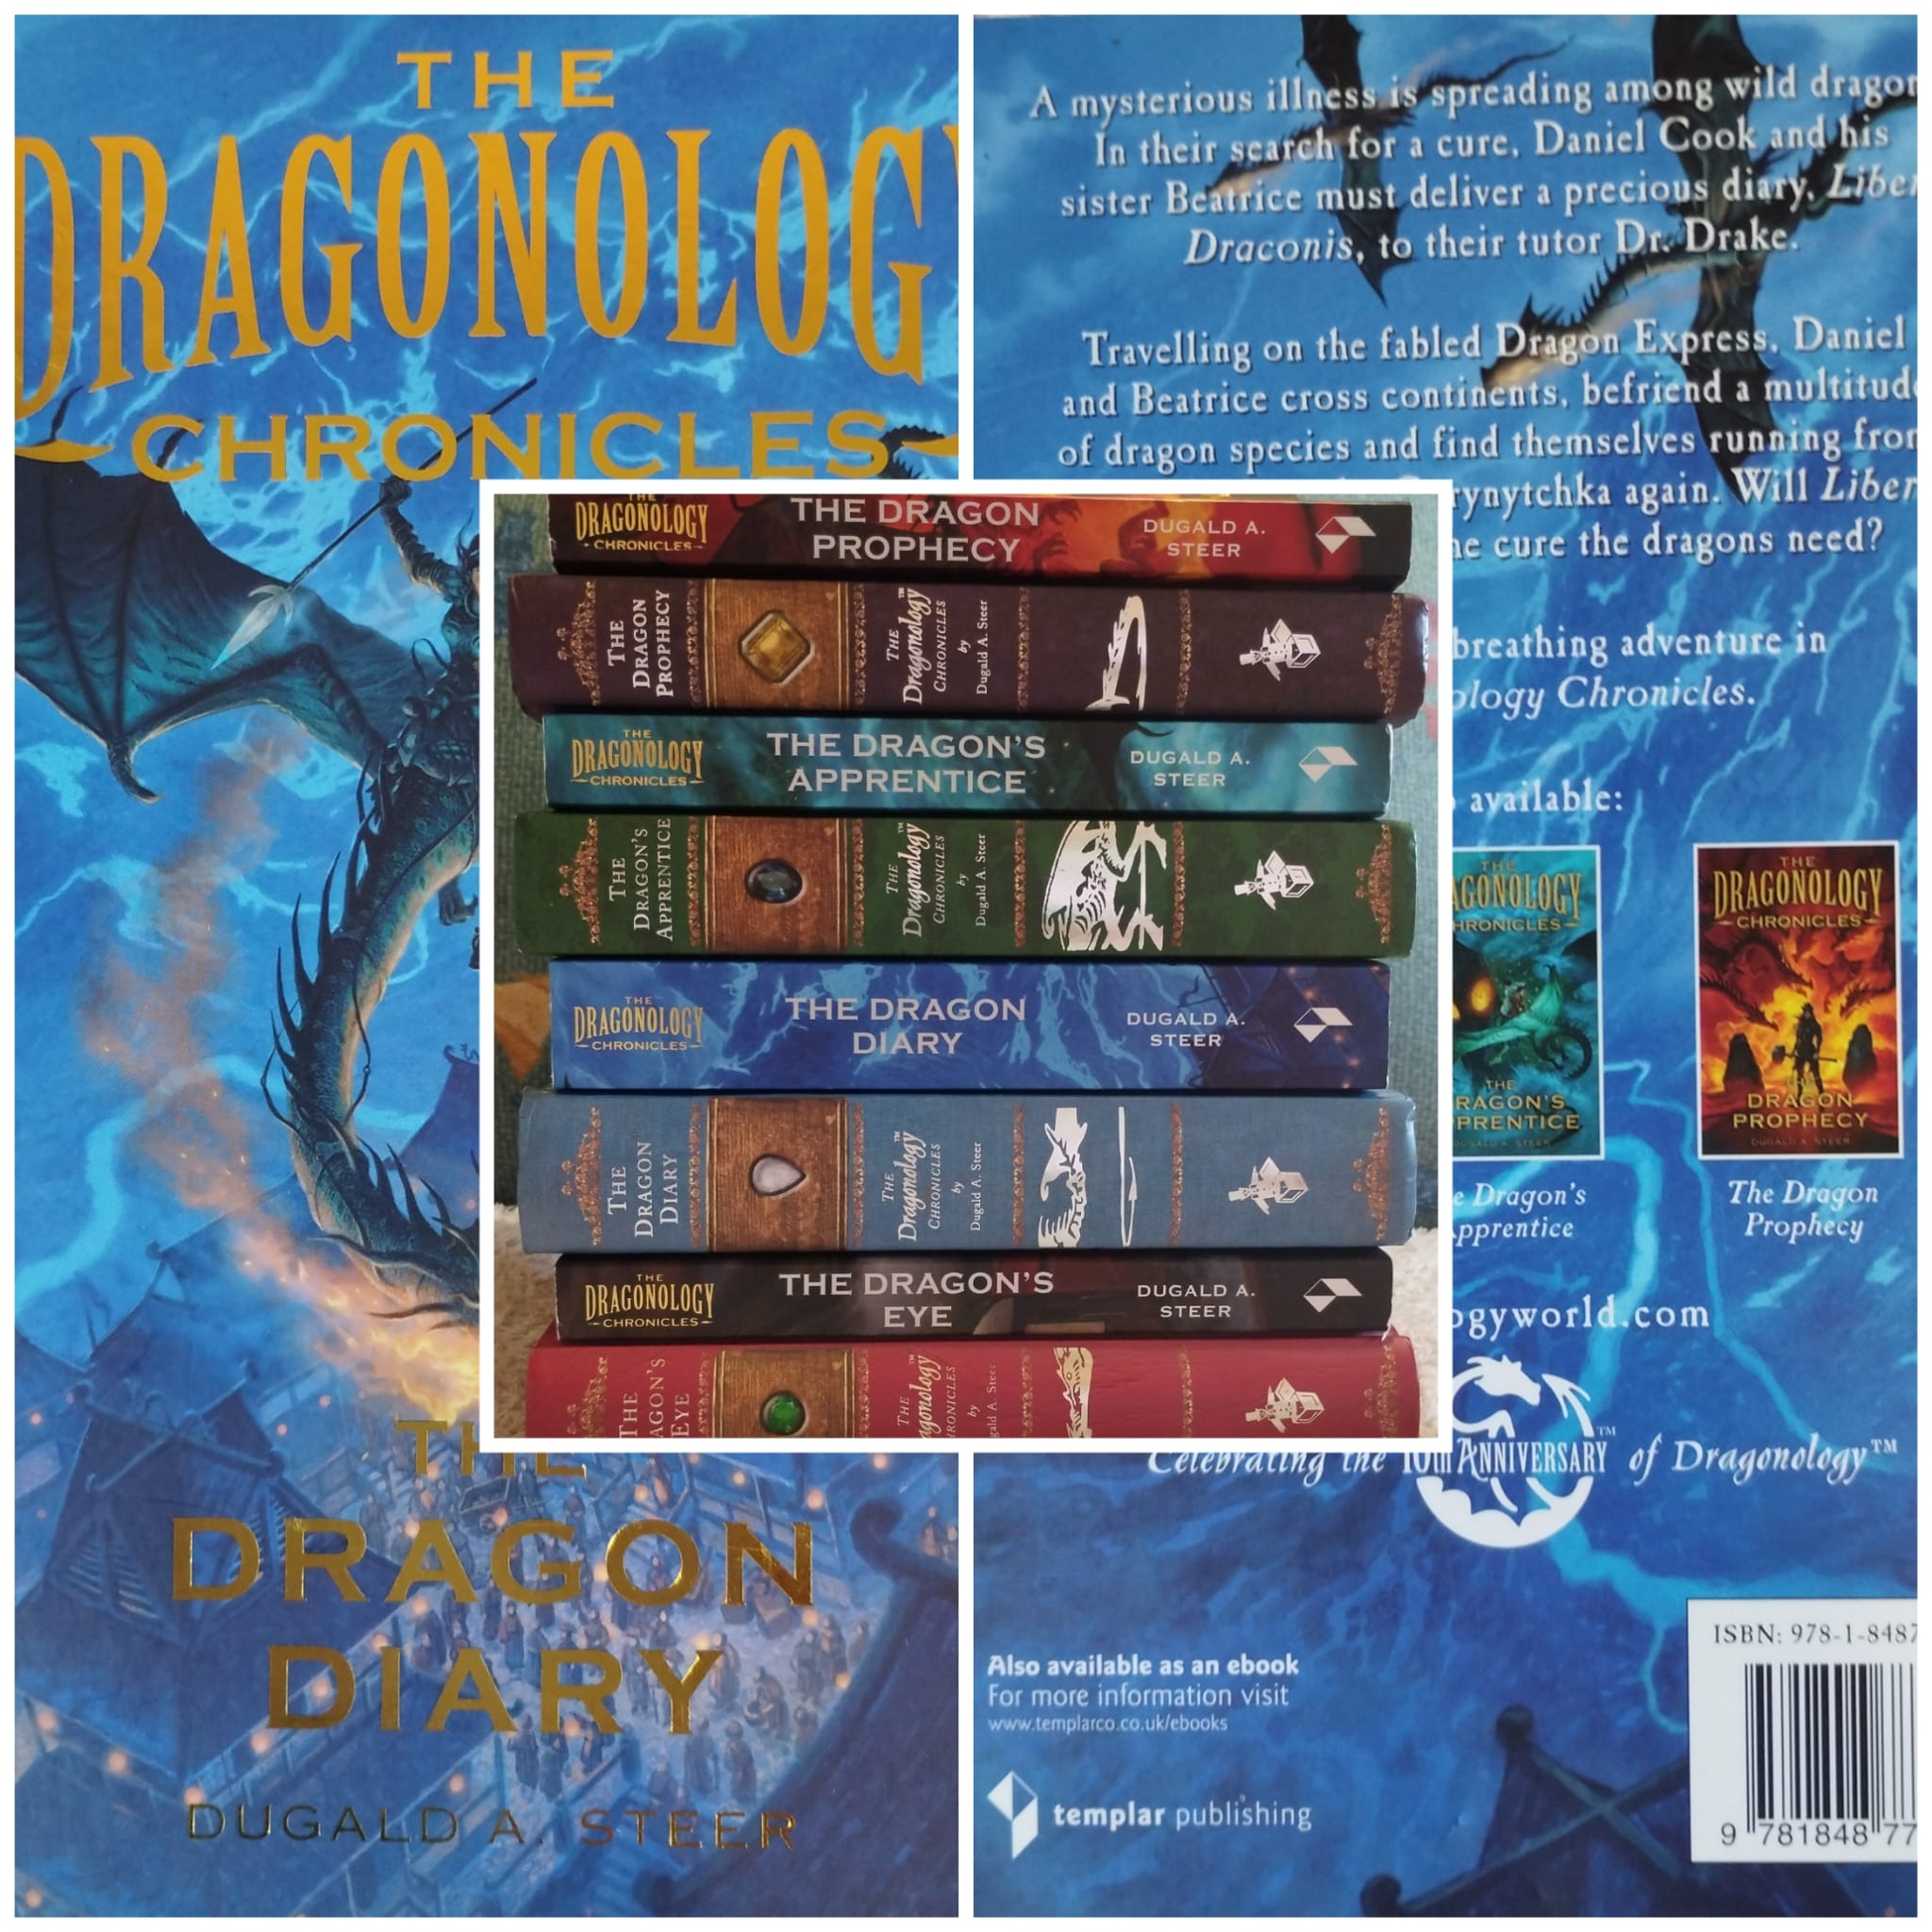 Dragonology Chronicles Volume 2 Dragons Diary Templar Publishing paperback